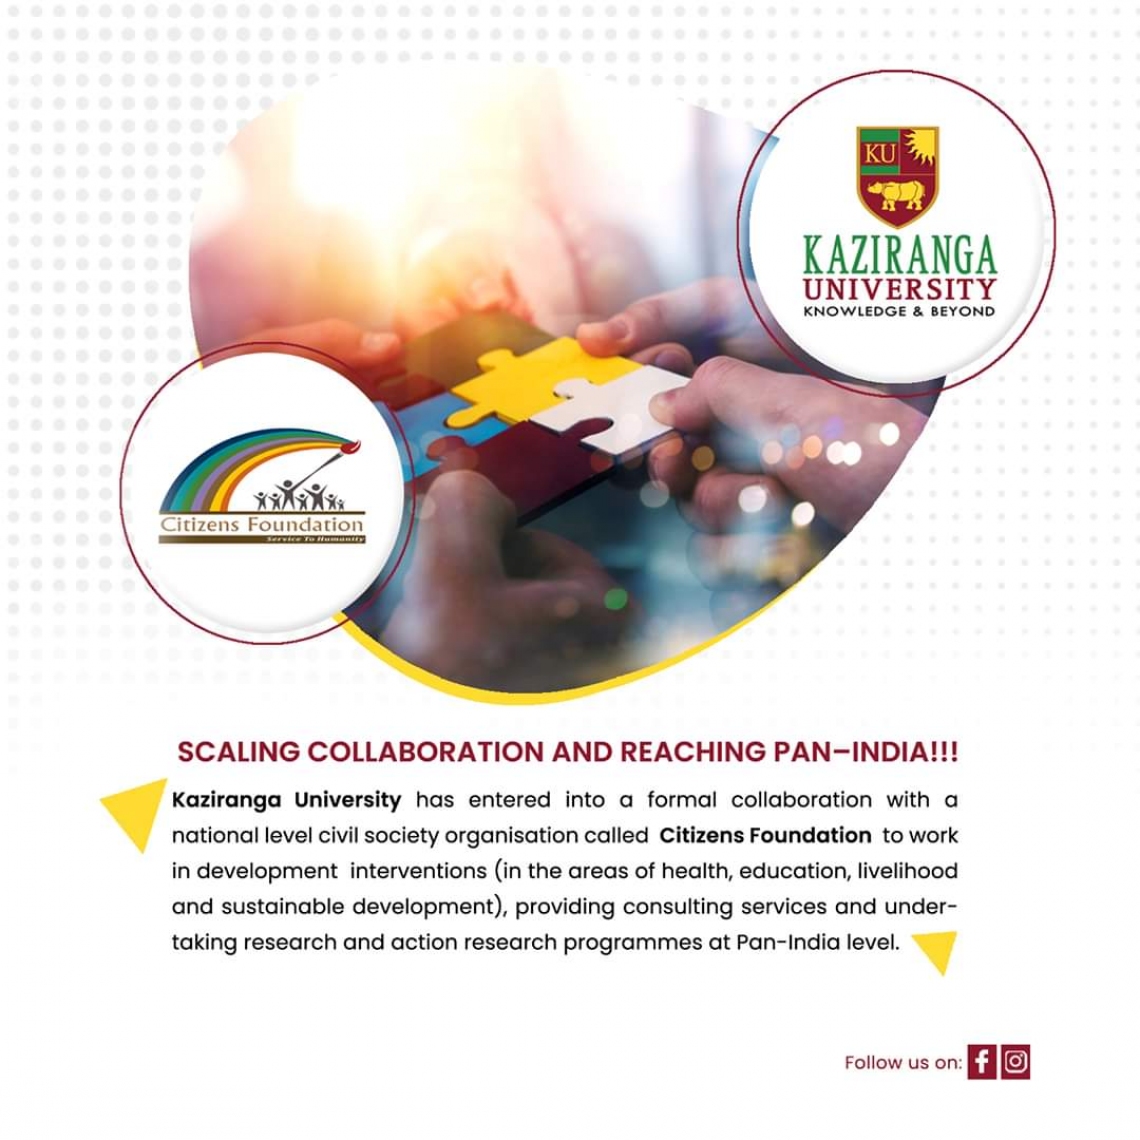 Kaziranga University has entered into a collaboration with Citizens Foundation